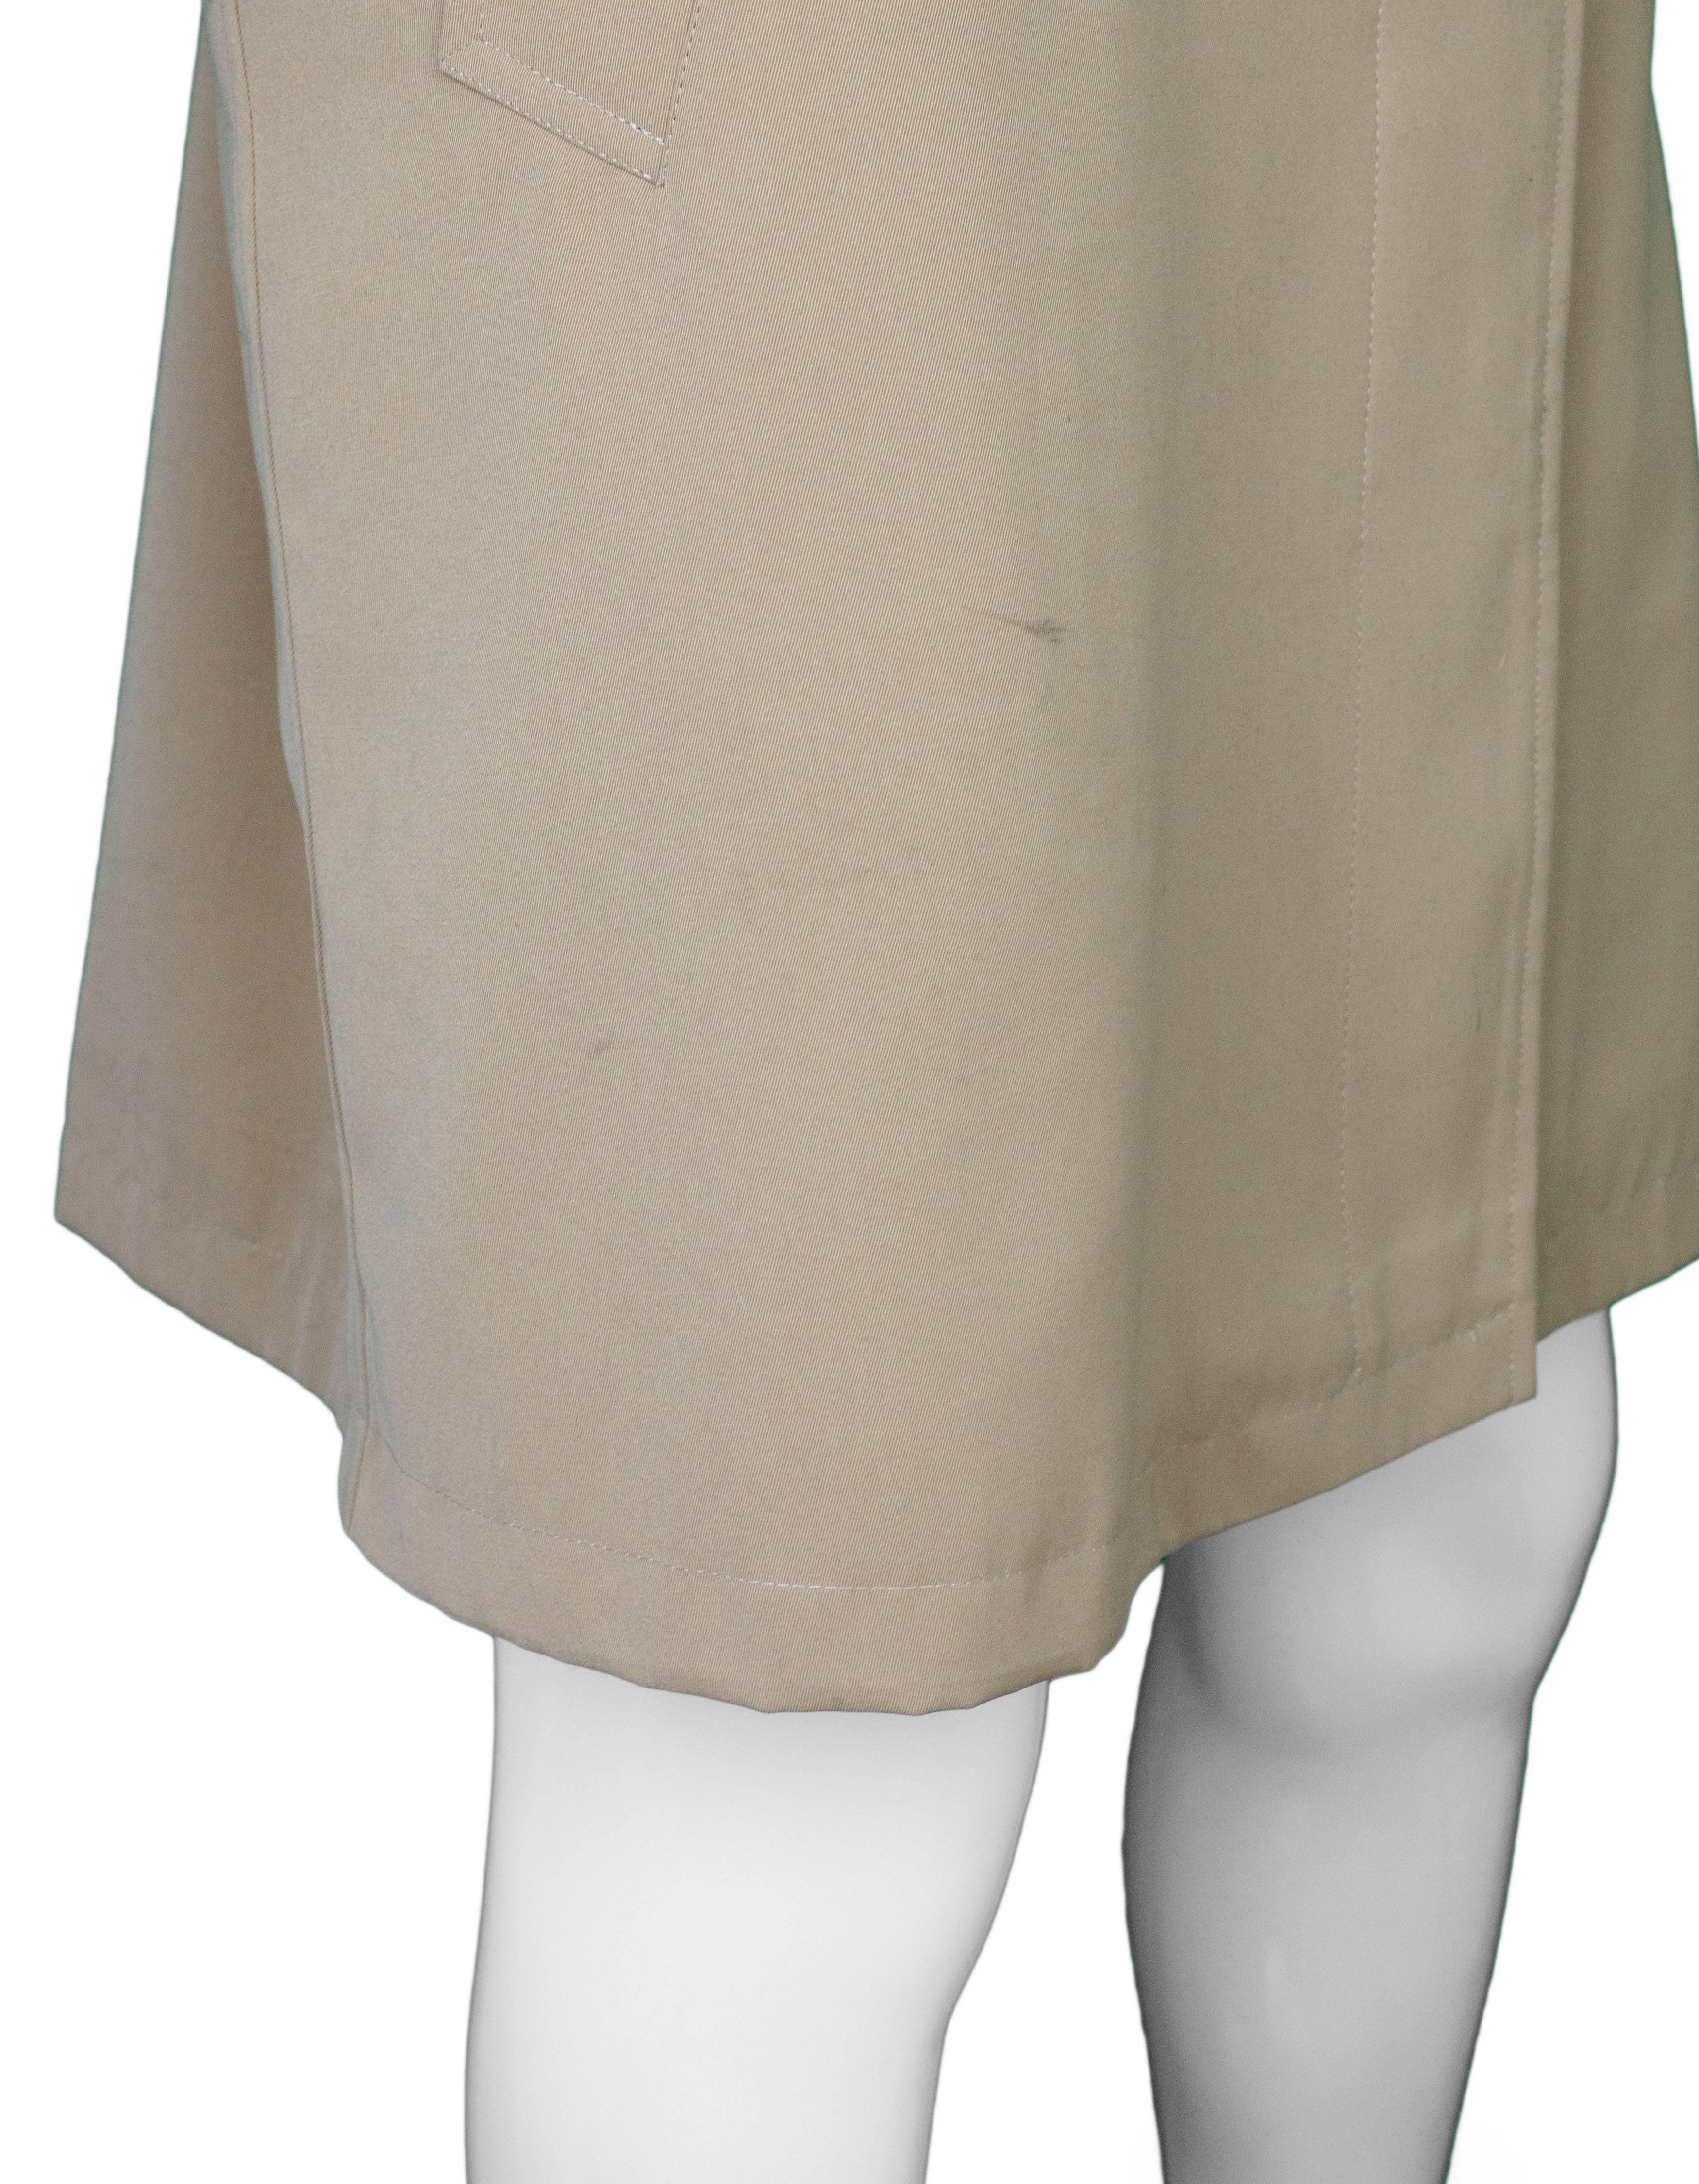 Burberry London Tan Trench Coat w/ Detachable Hood sz XL 1